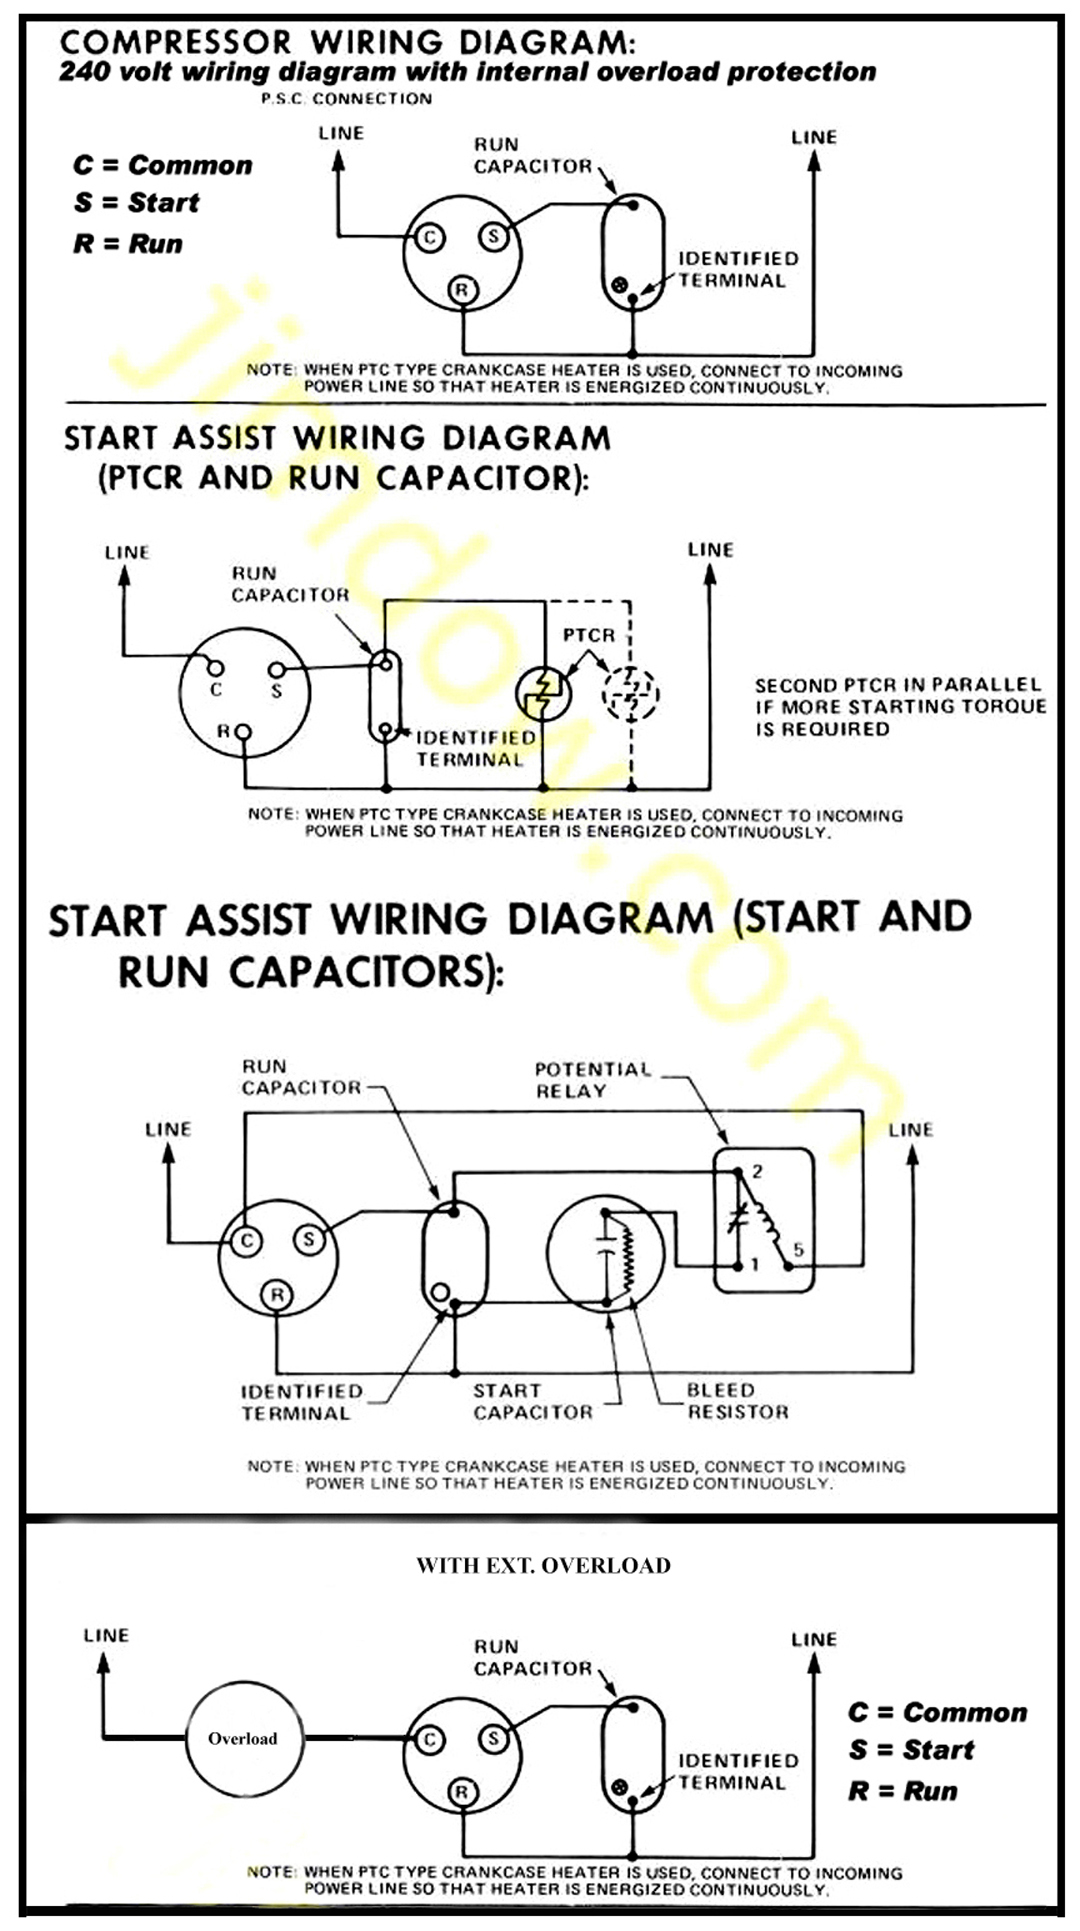 A C Compressor Wiring Diagram - Wiring Diagrams Hubs - Auto Ac Compressor Wiring Diagram